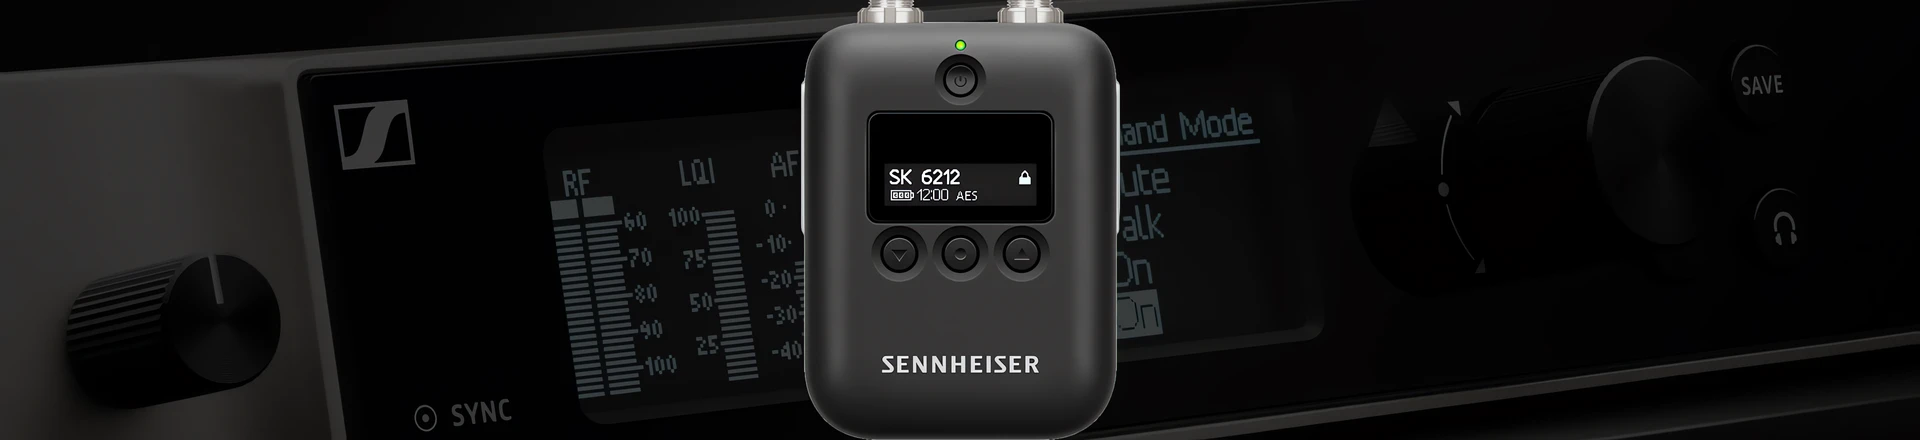 Sennheiser prezentuje nadajnik bodypack dla systemu Digital 6000